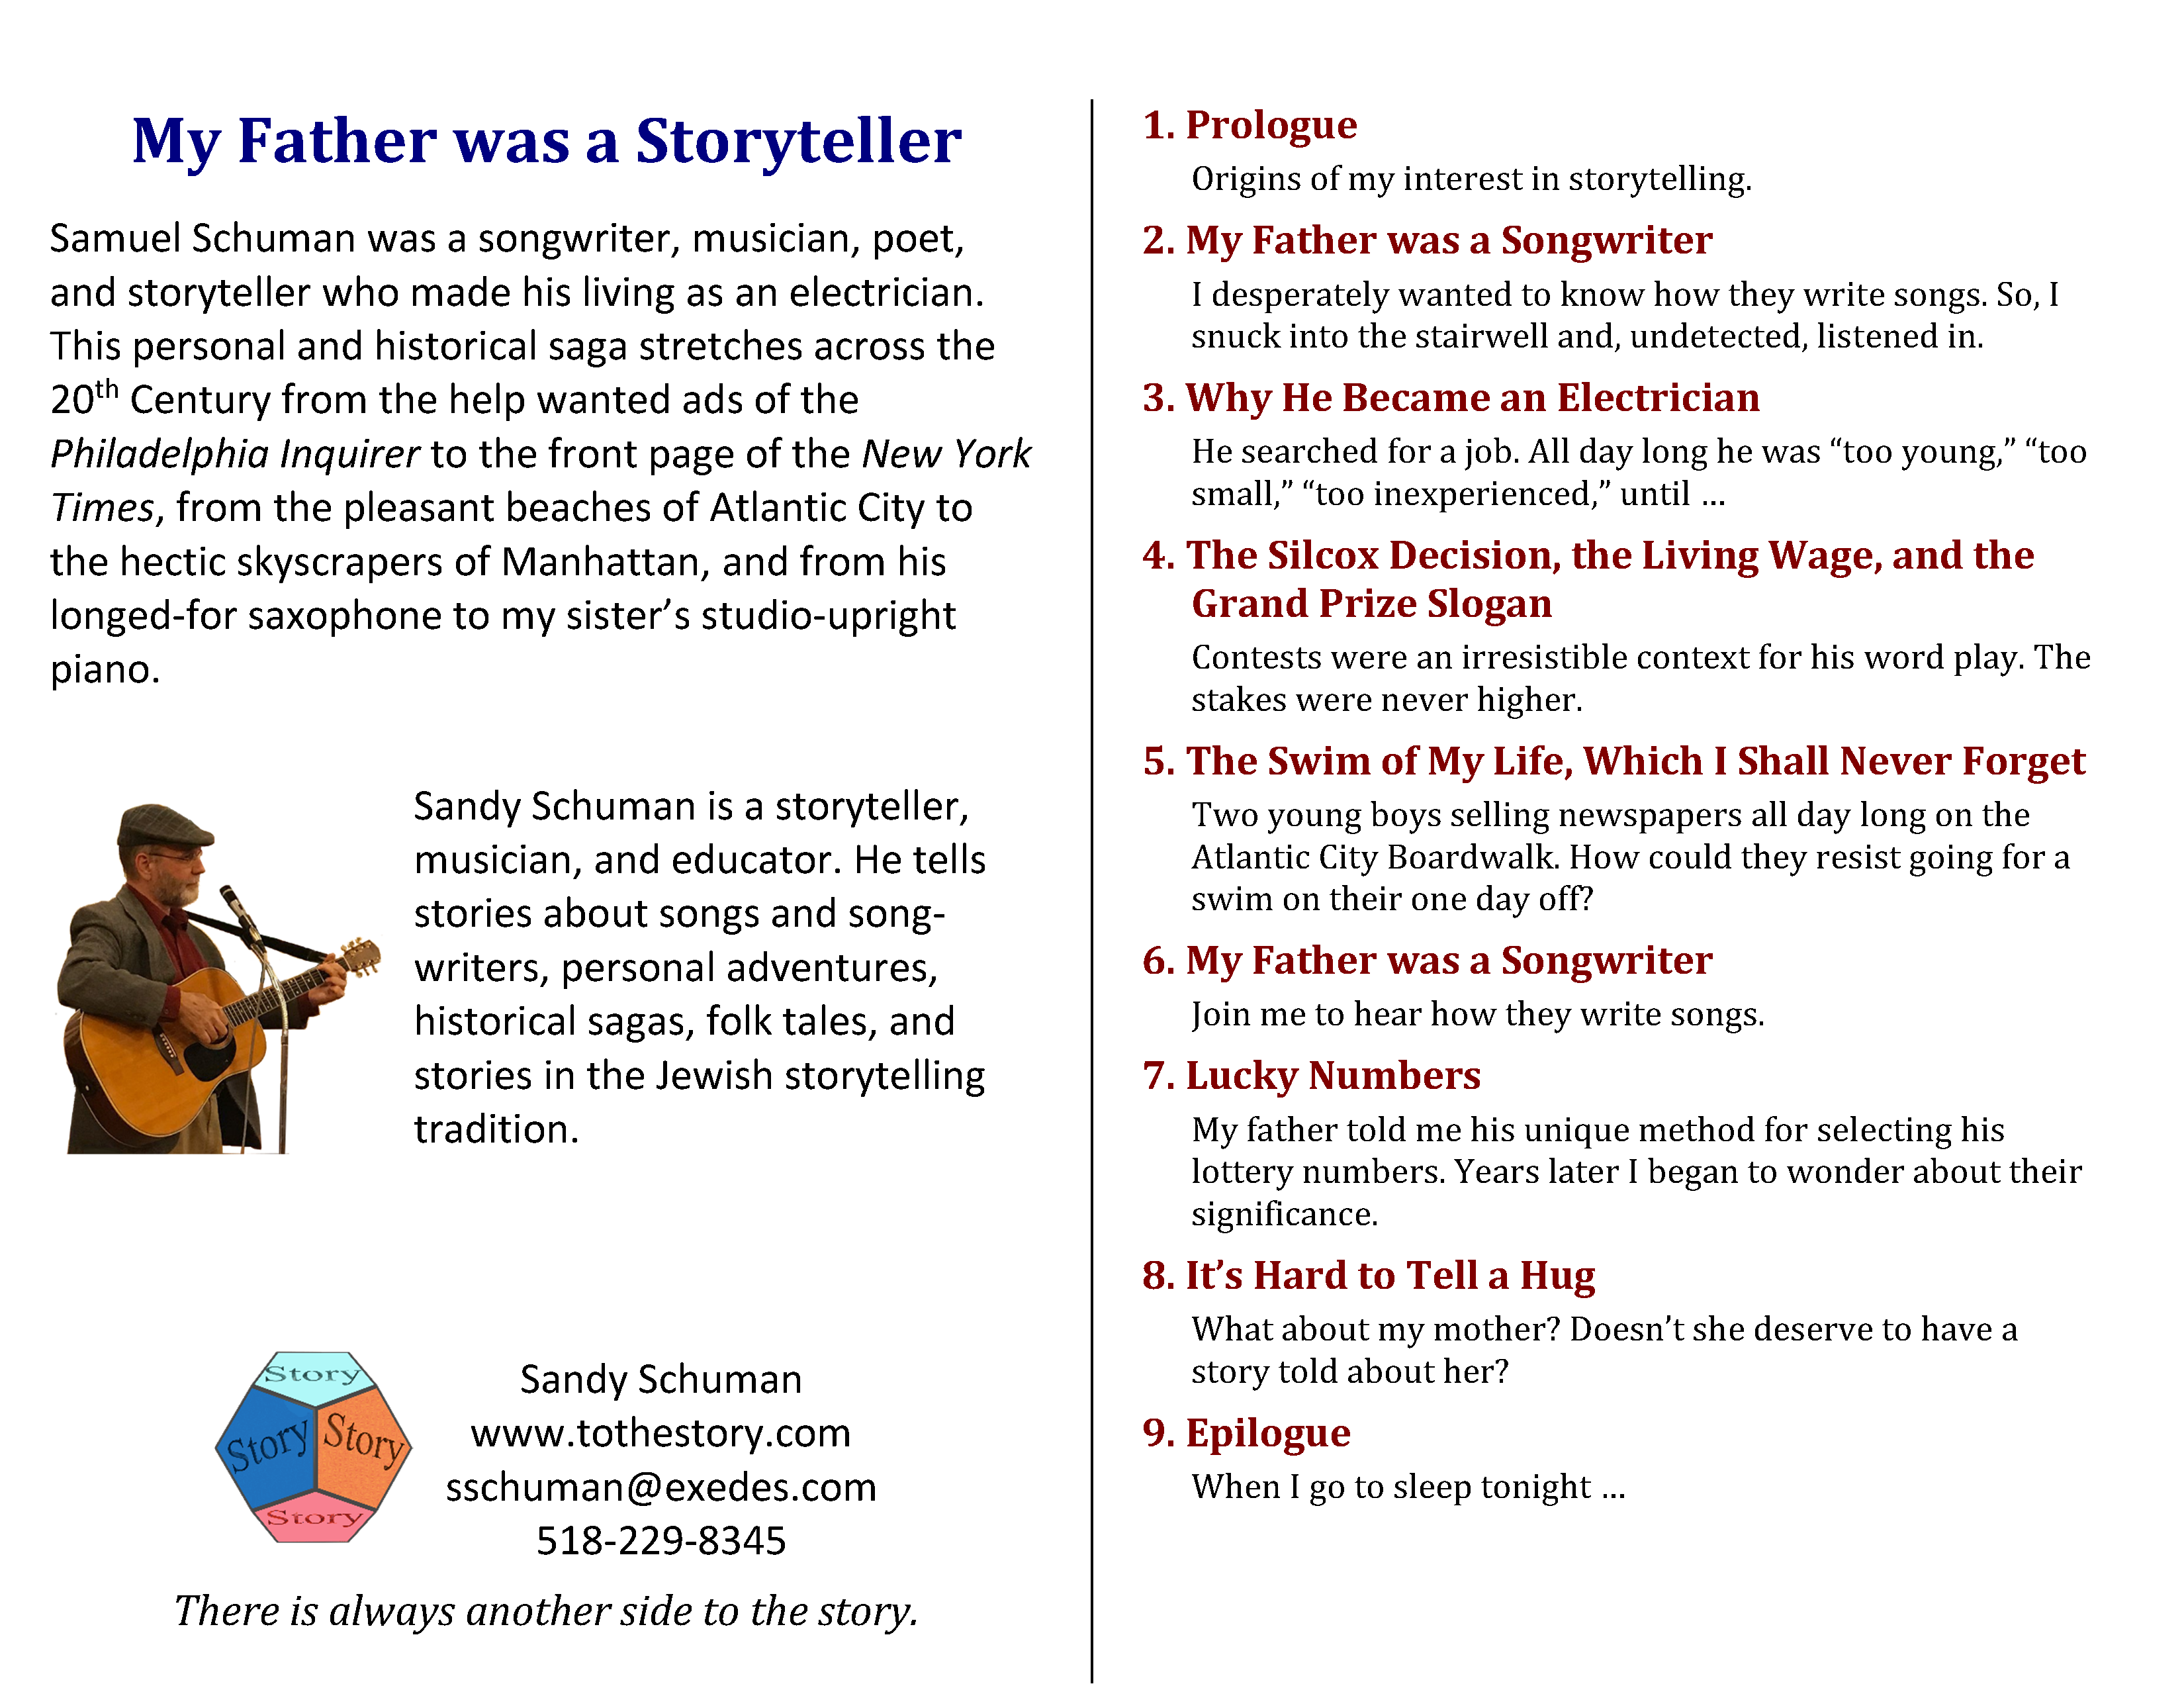 Program: My Father was a Storyteller